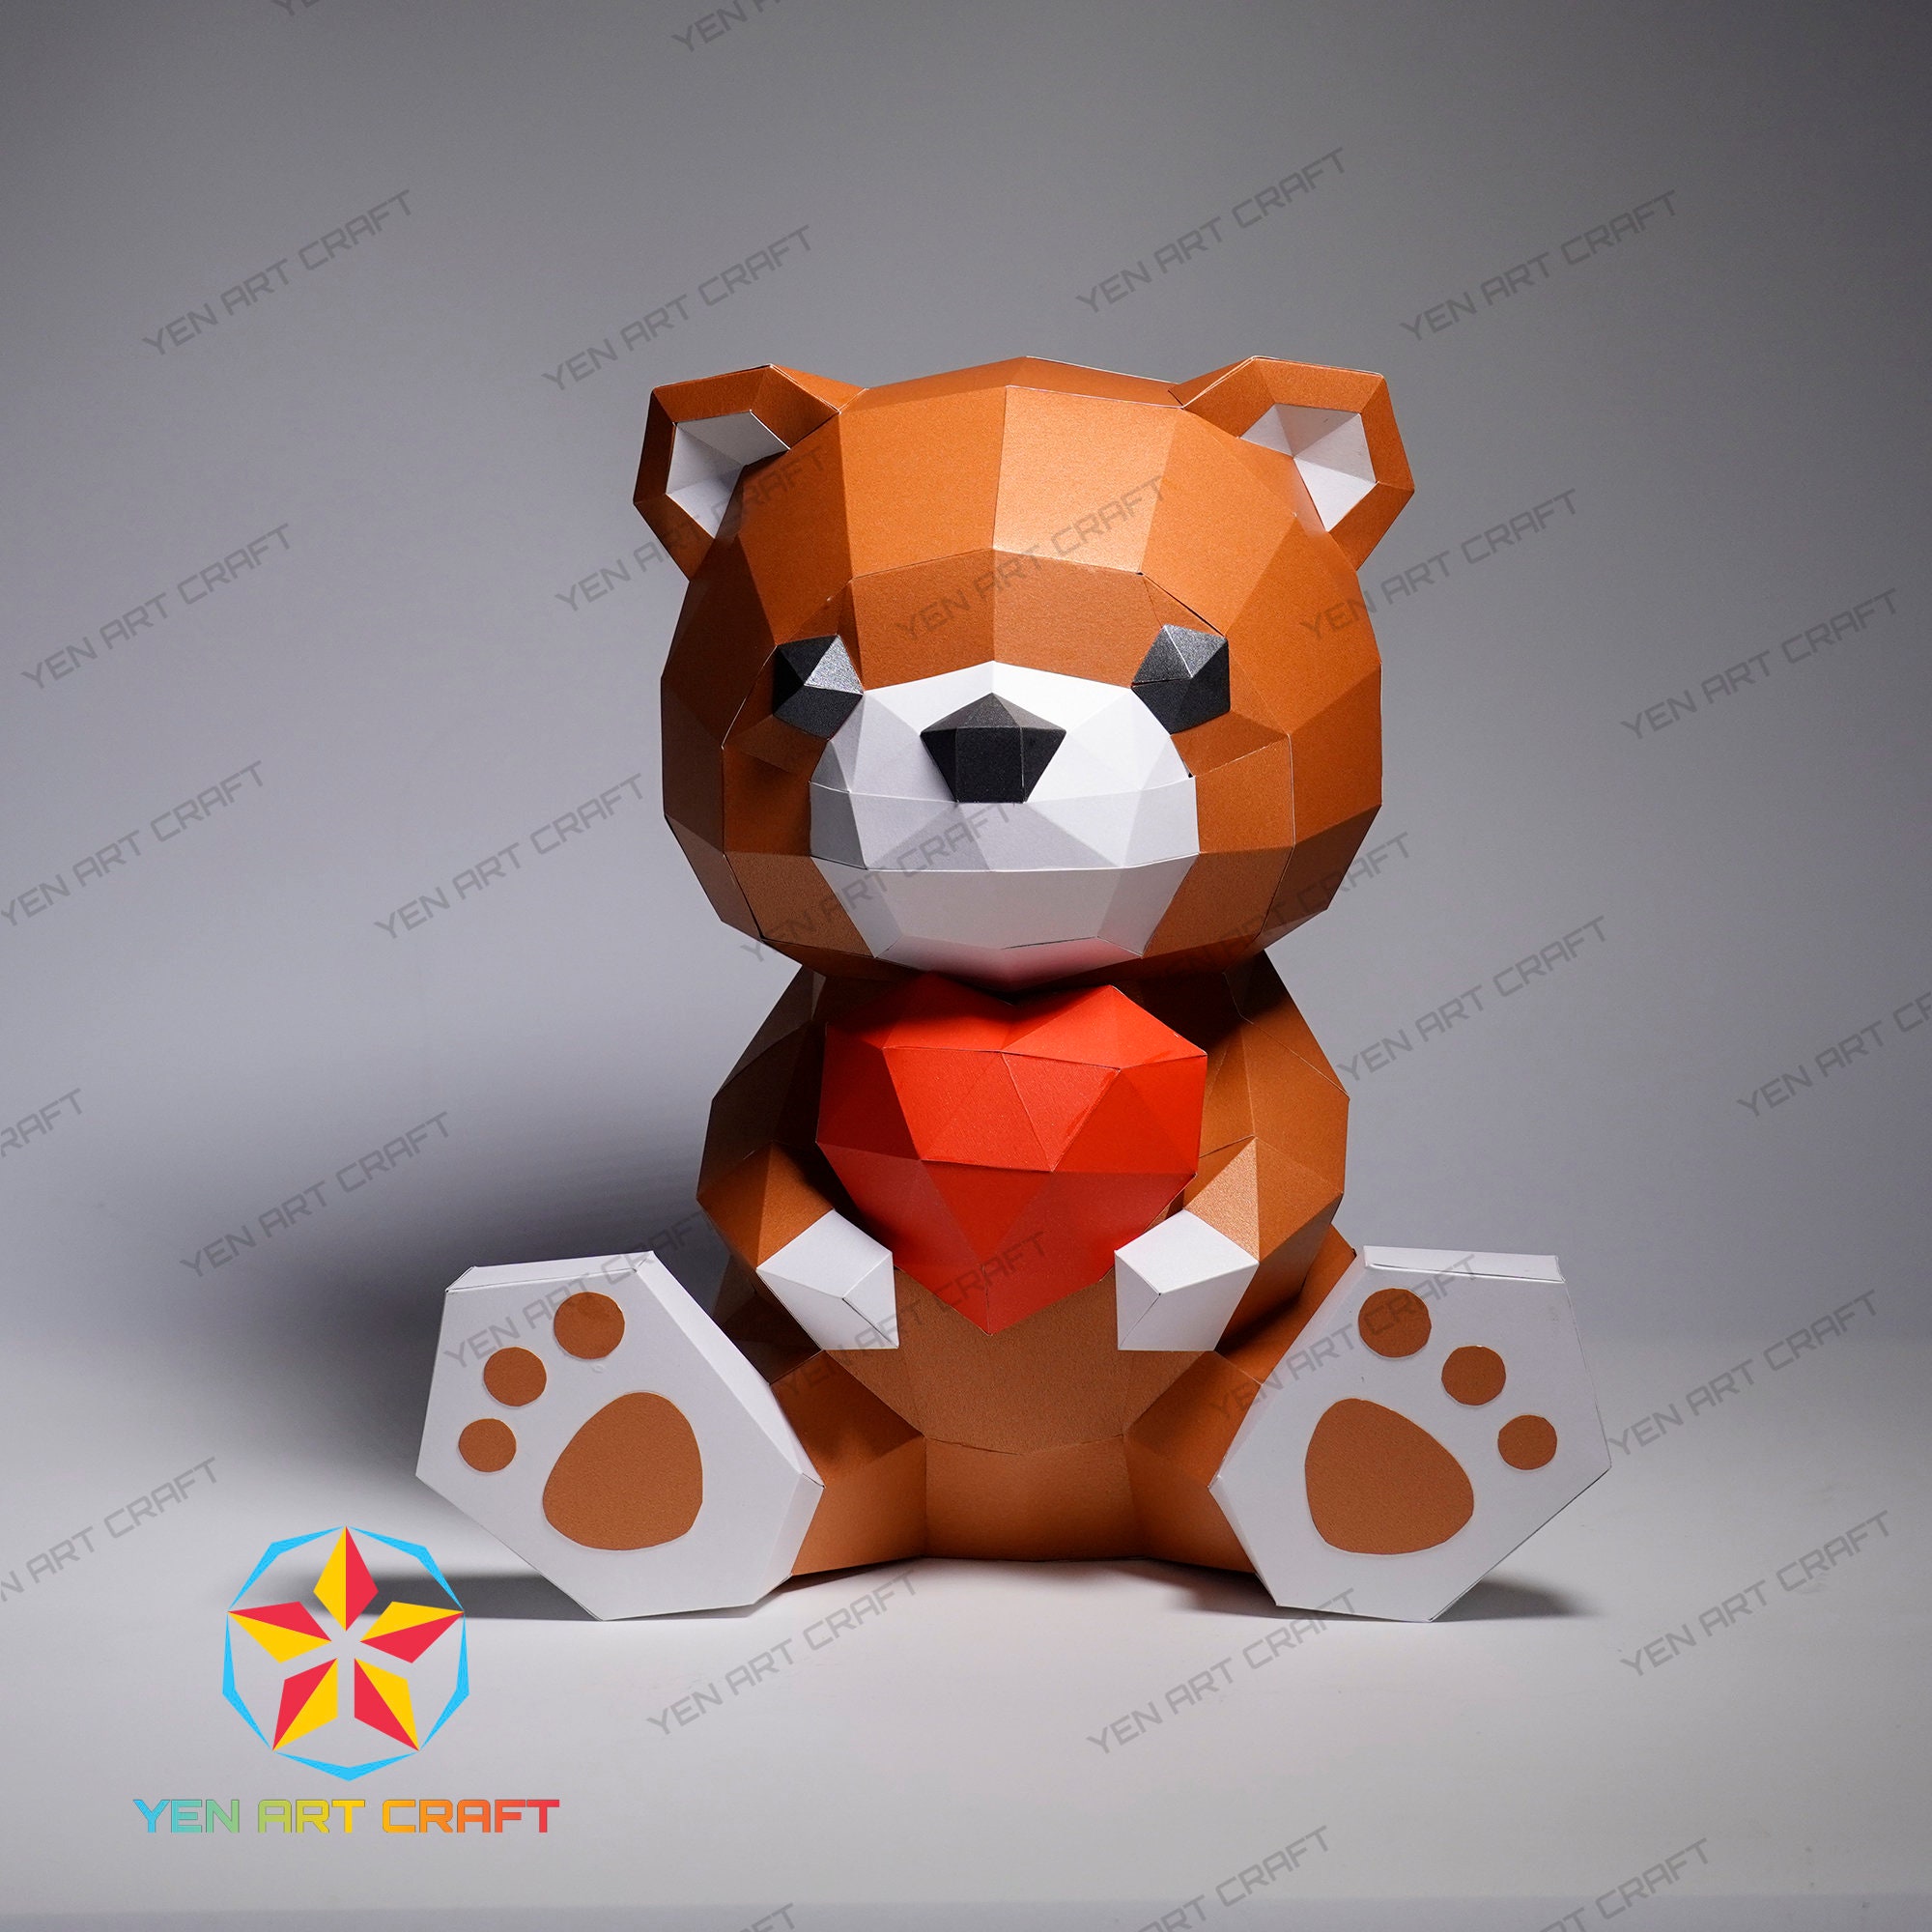 Get Well Soon Teddy Bear SVG Cut file by Creative Fabrica Crafts